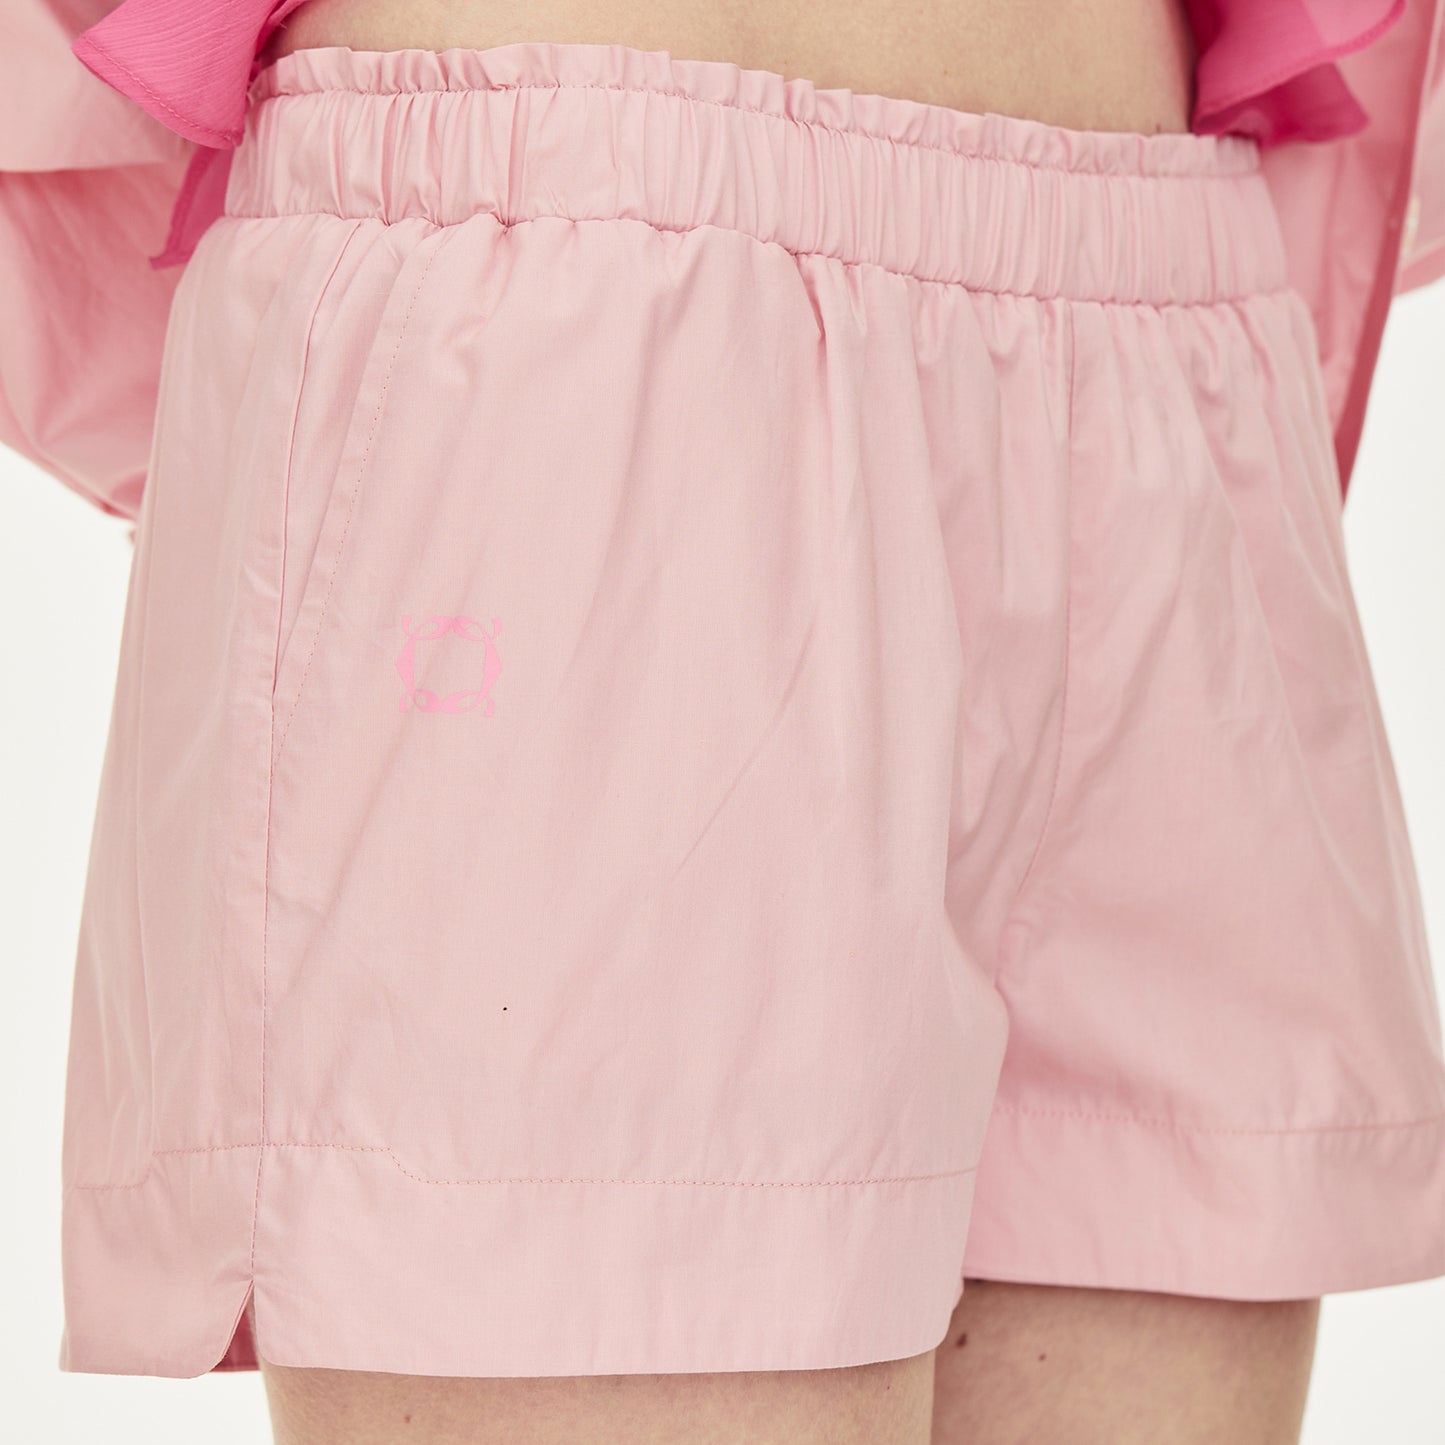 Margot Signatured Boxer Shorts in Pink